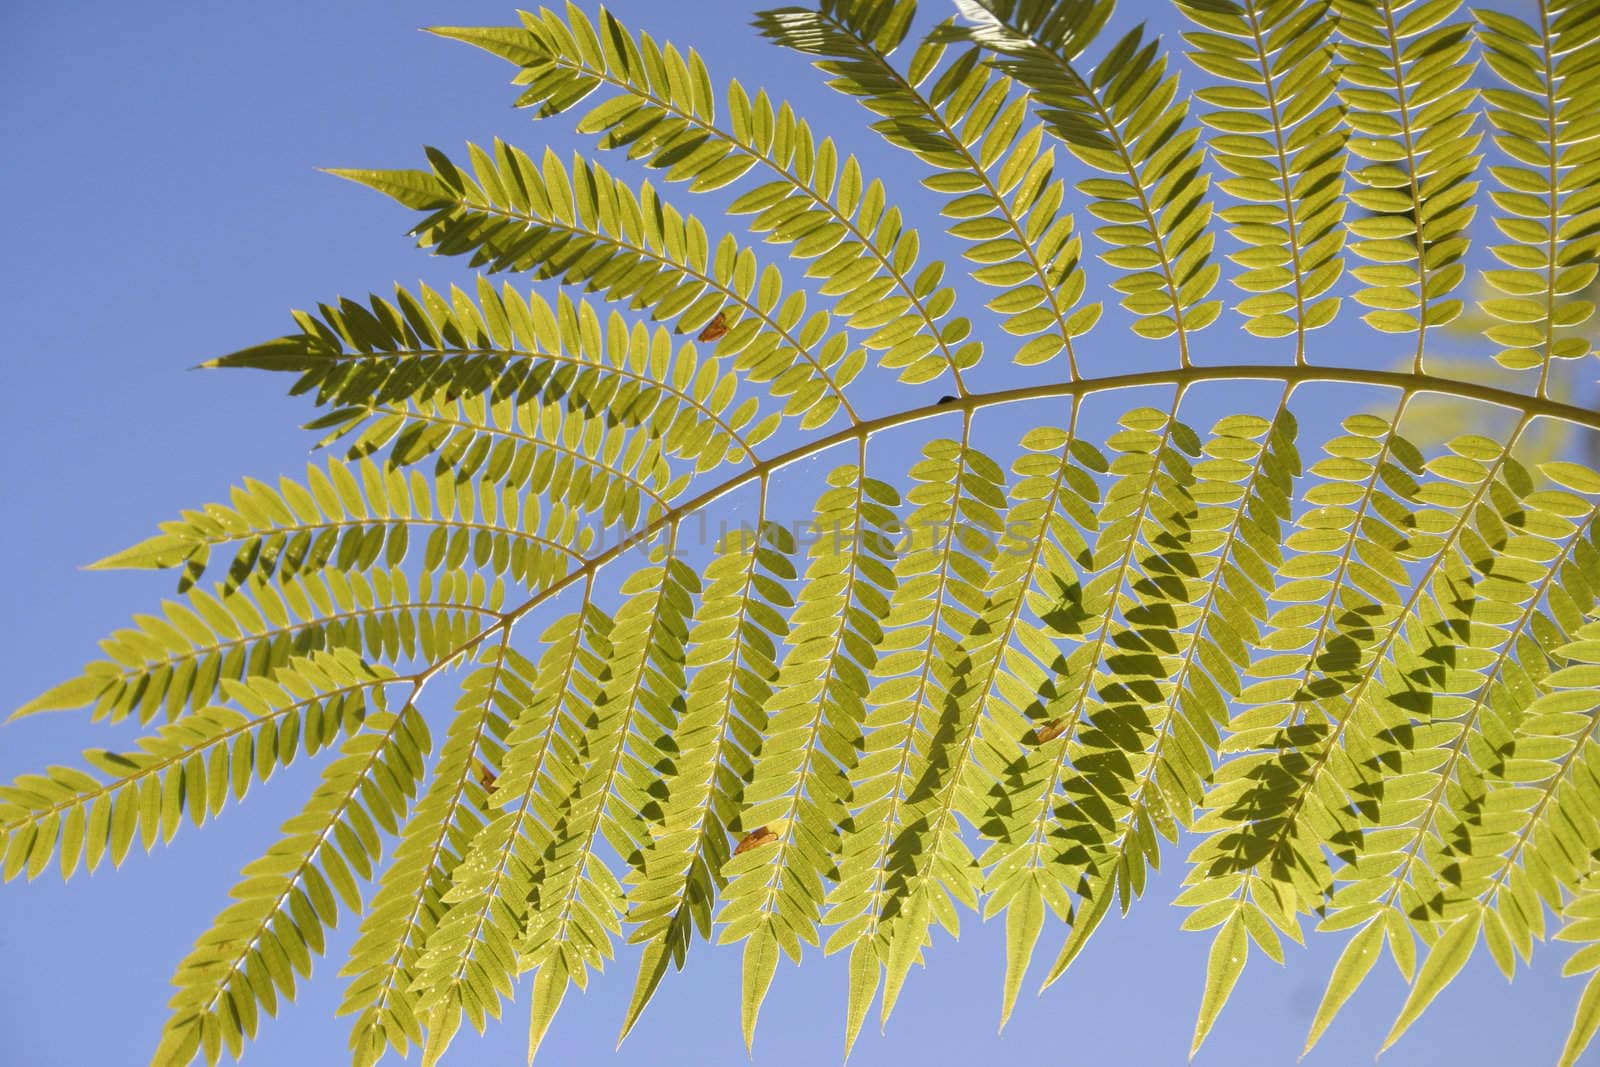 Jacaranda leaf against a blue sky